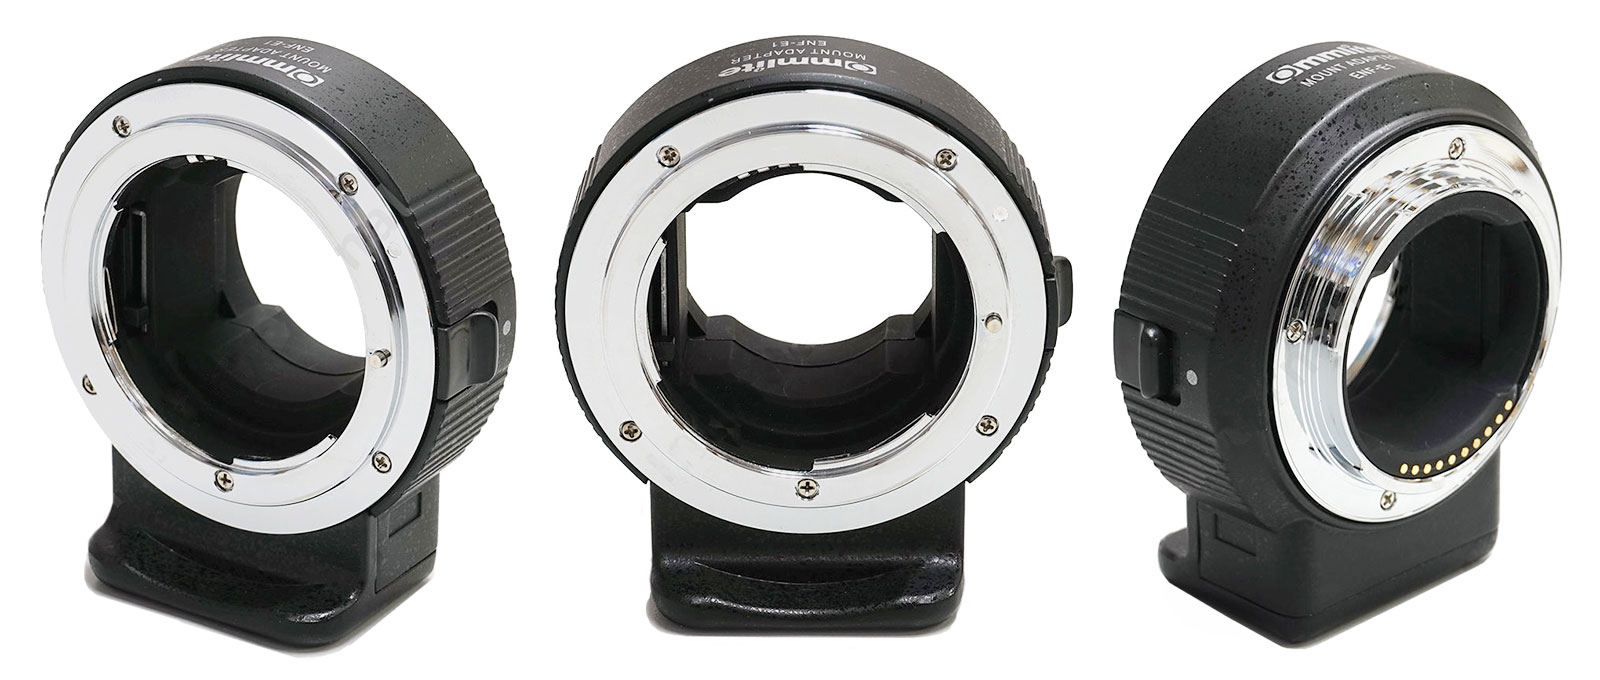 Nikon Lens Adapters for Sony E-Mount Cameras